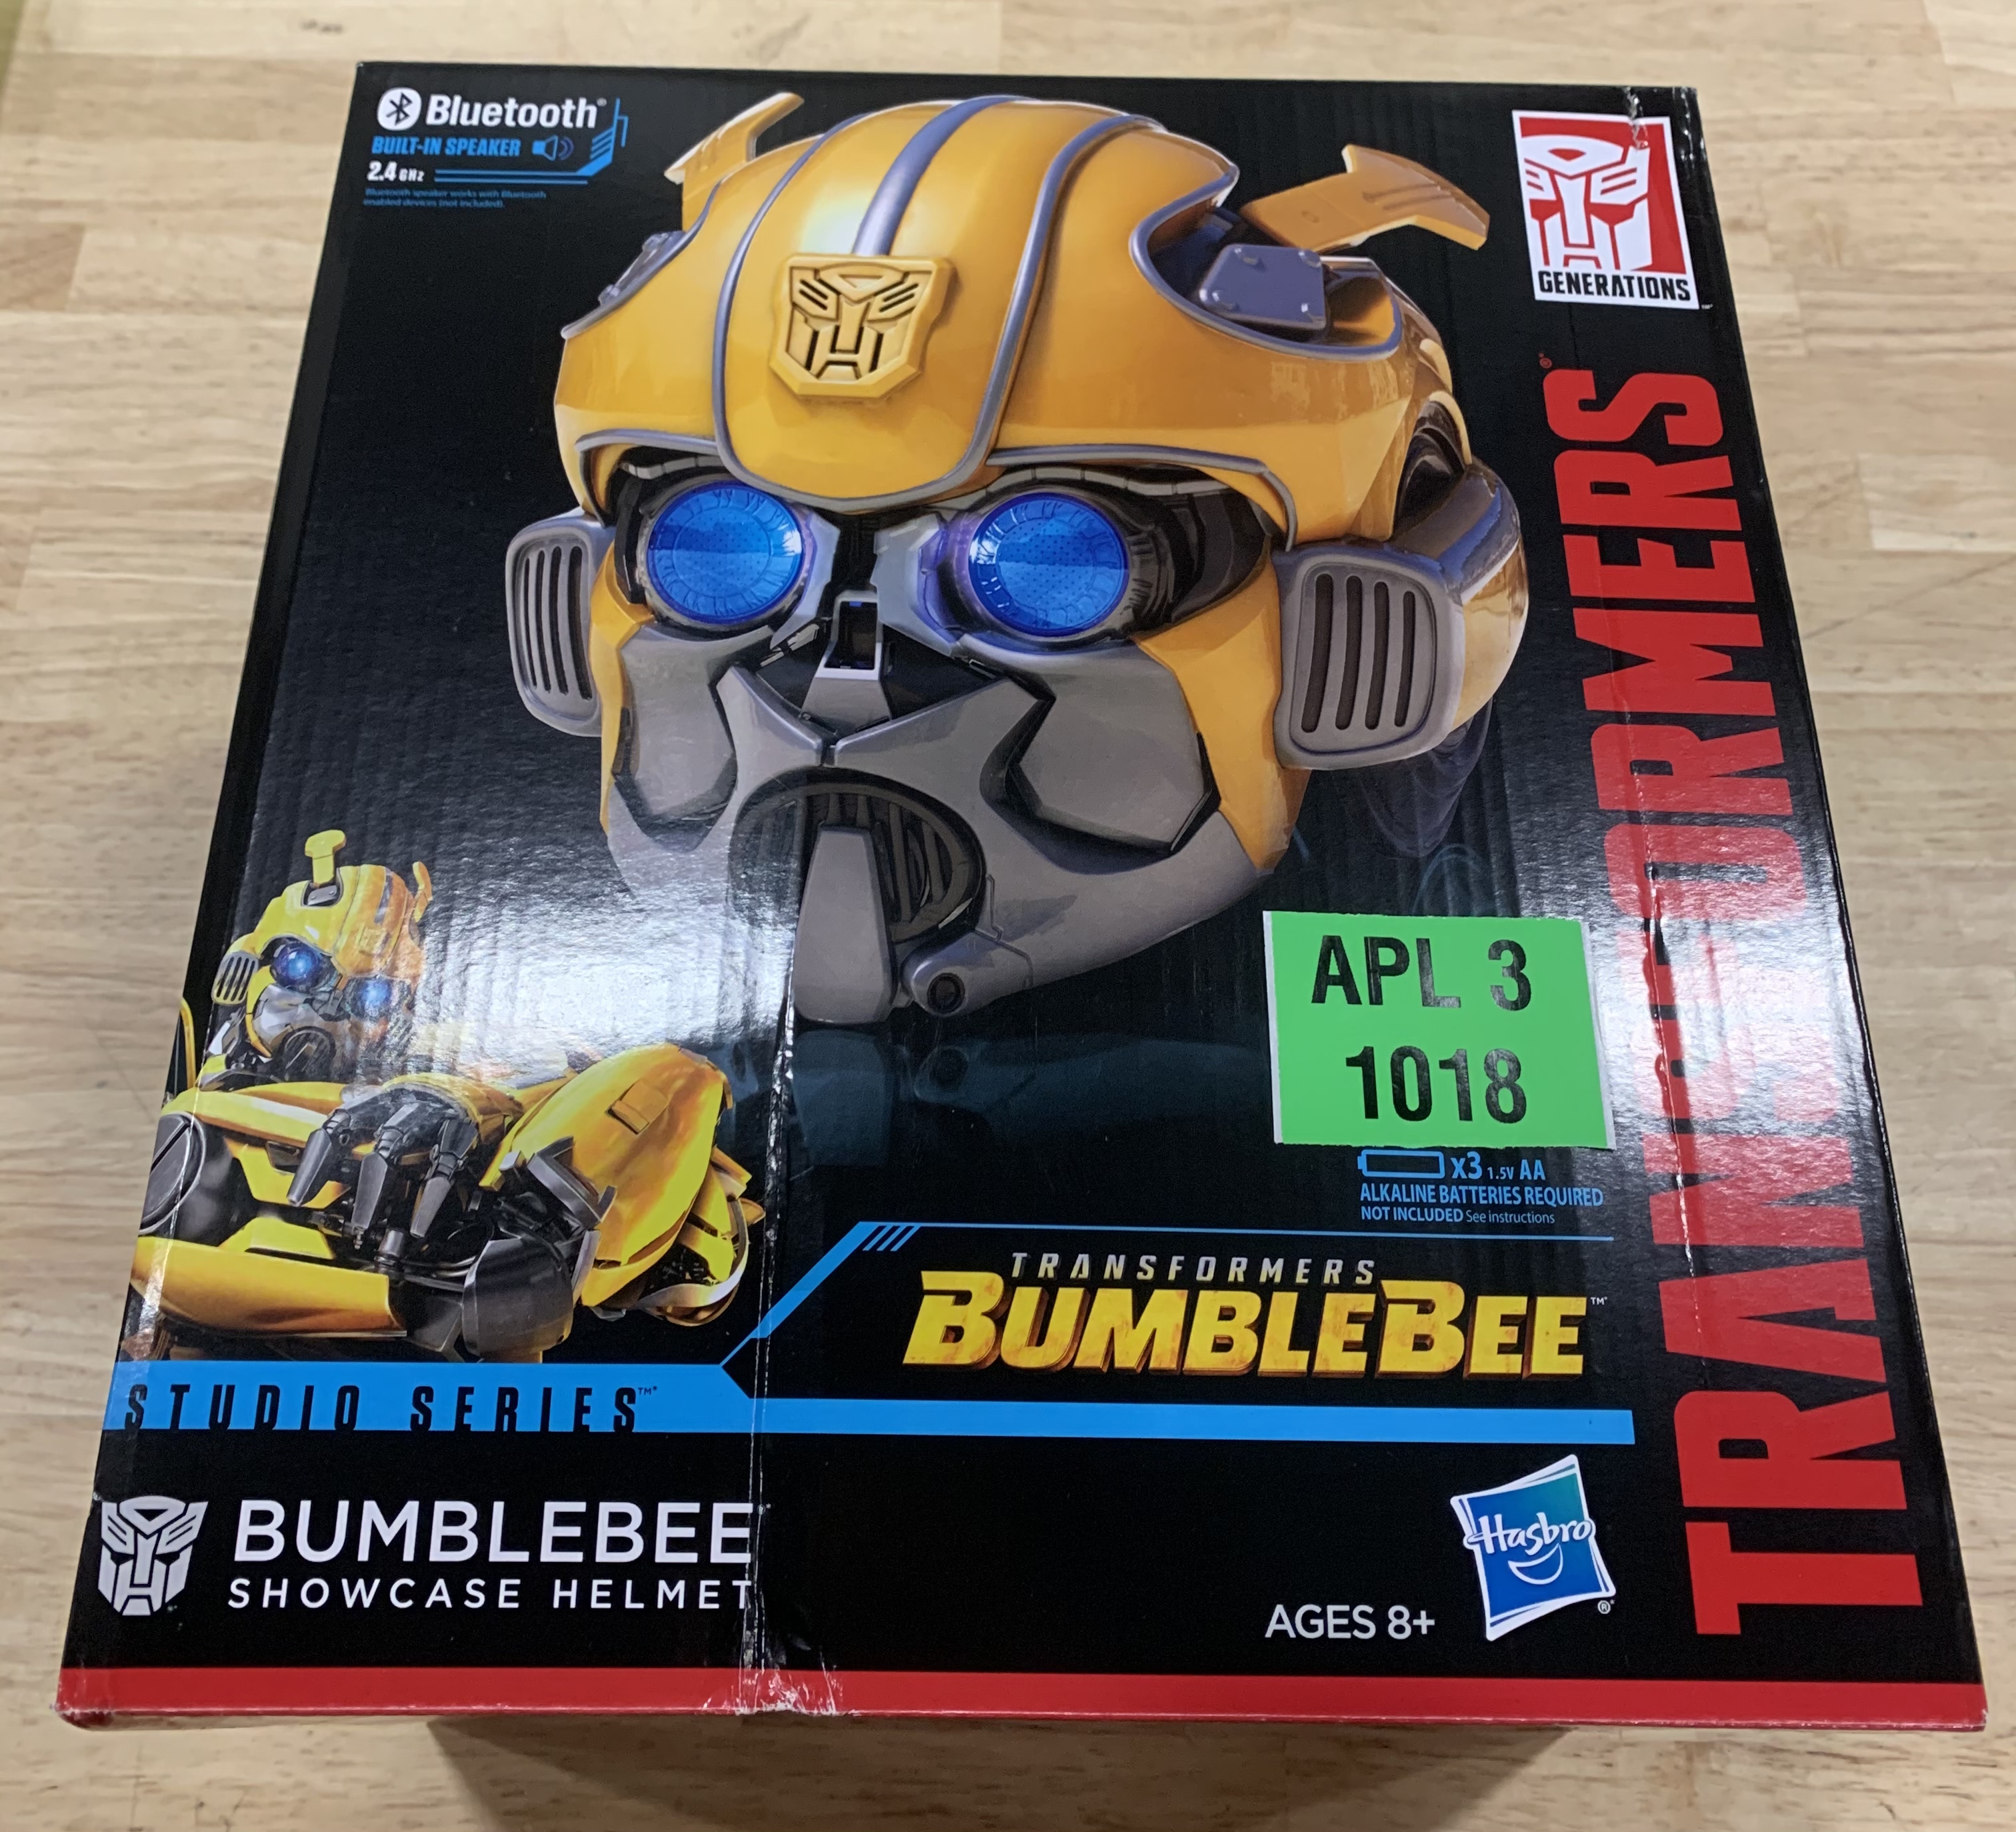 Transformers Studio Series Bumblebee Movie Showcase Helmet Hasbro Bluetooth NEW 